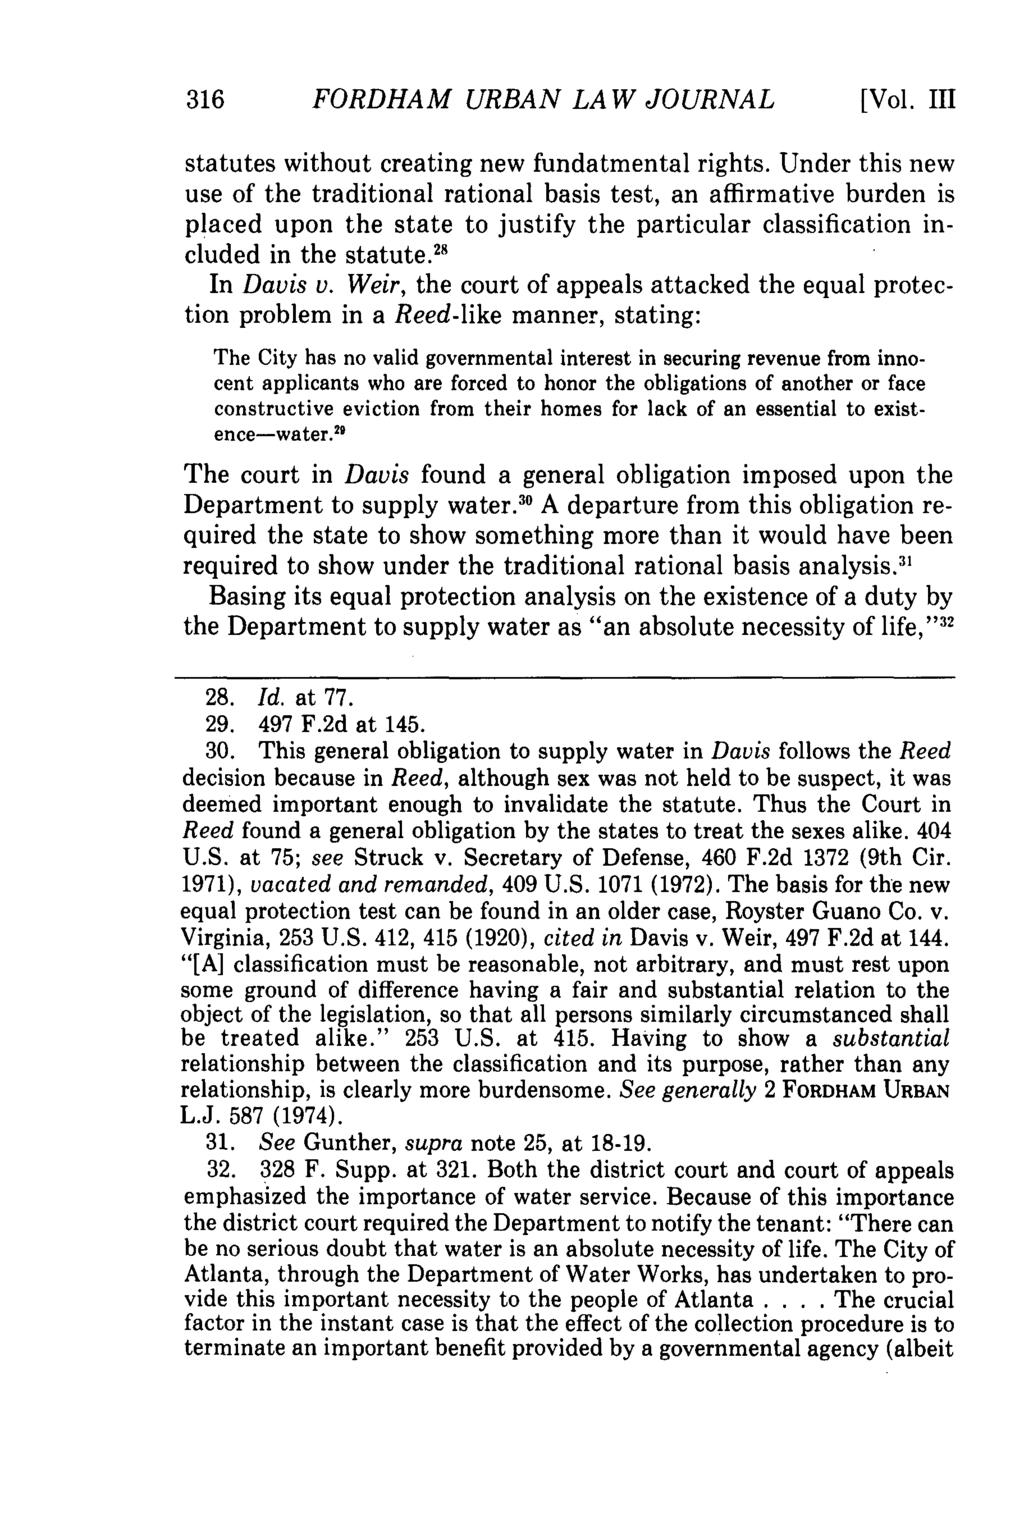 FORDHAM URBAN LA W JOURNAL [Vol. III statutes without creating new fundatmental rights.